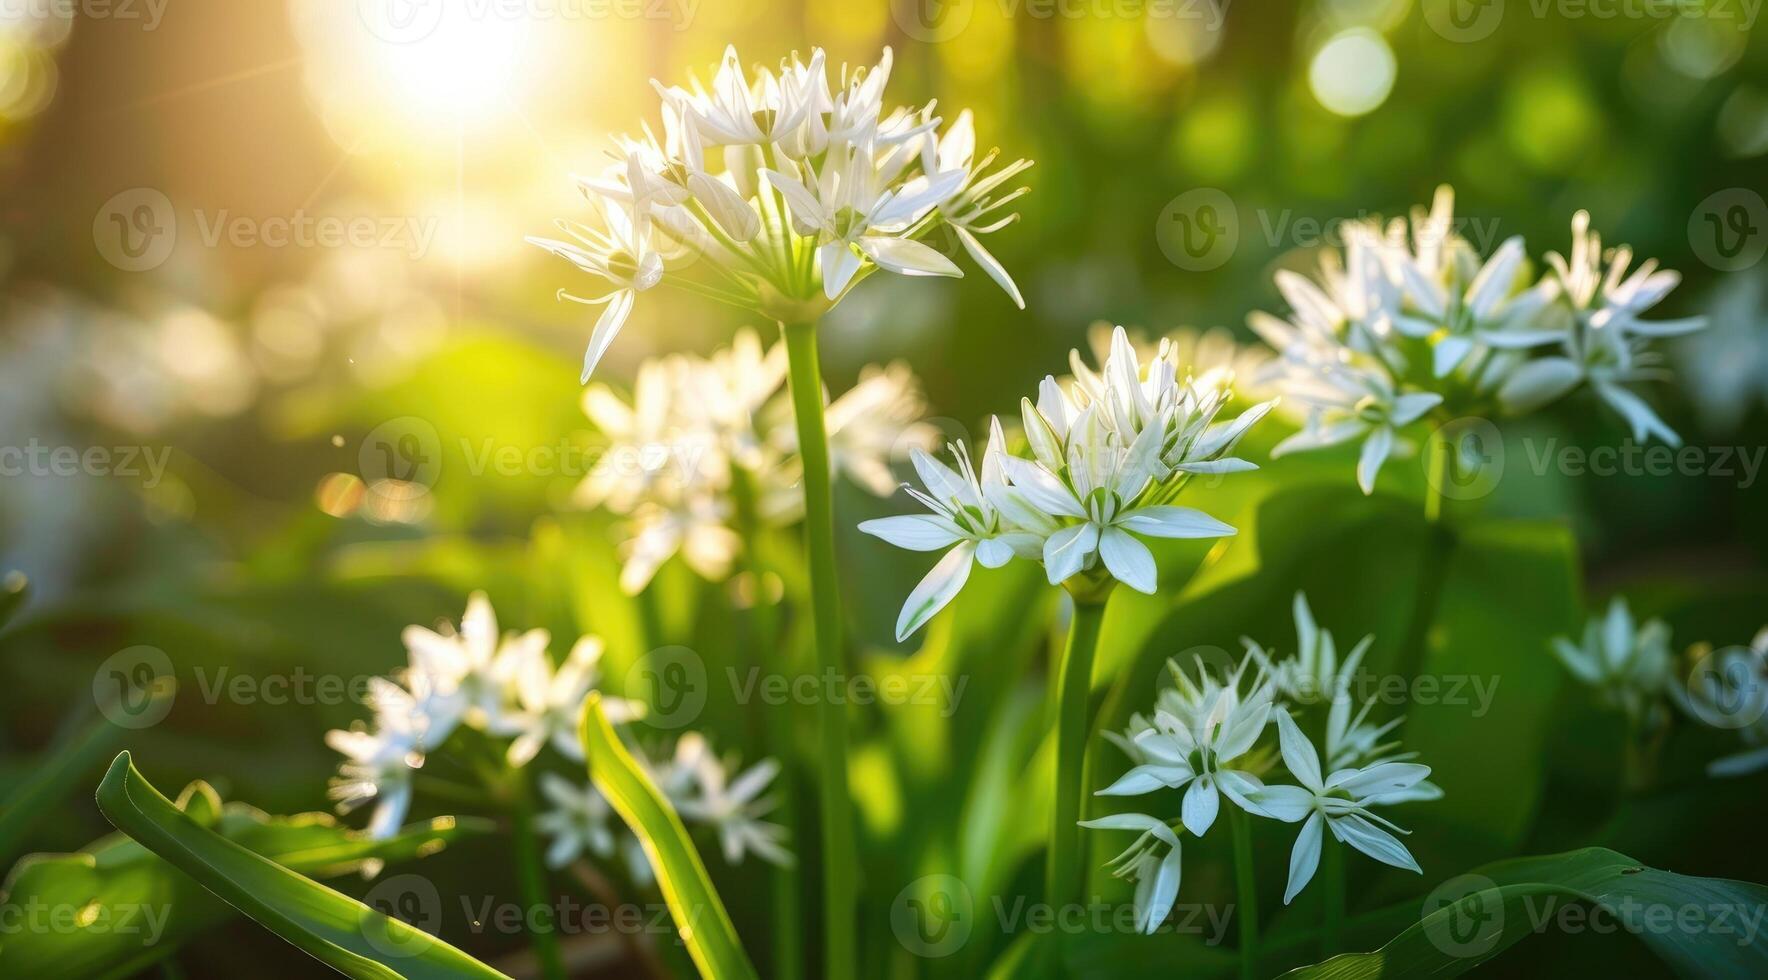 Medicinal herbs plants. Close up of blooming wild garlic. Allium ursinum in forest or garden in spring. photo